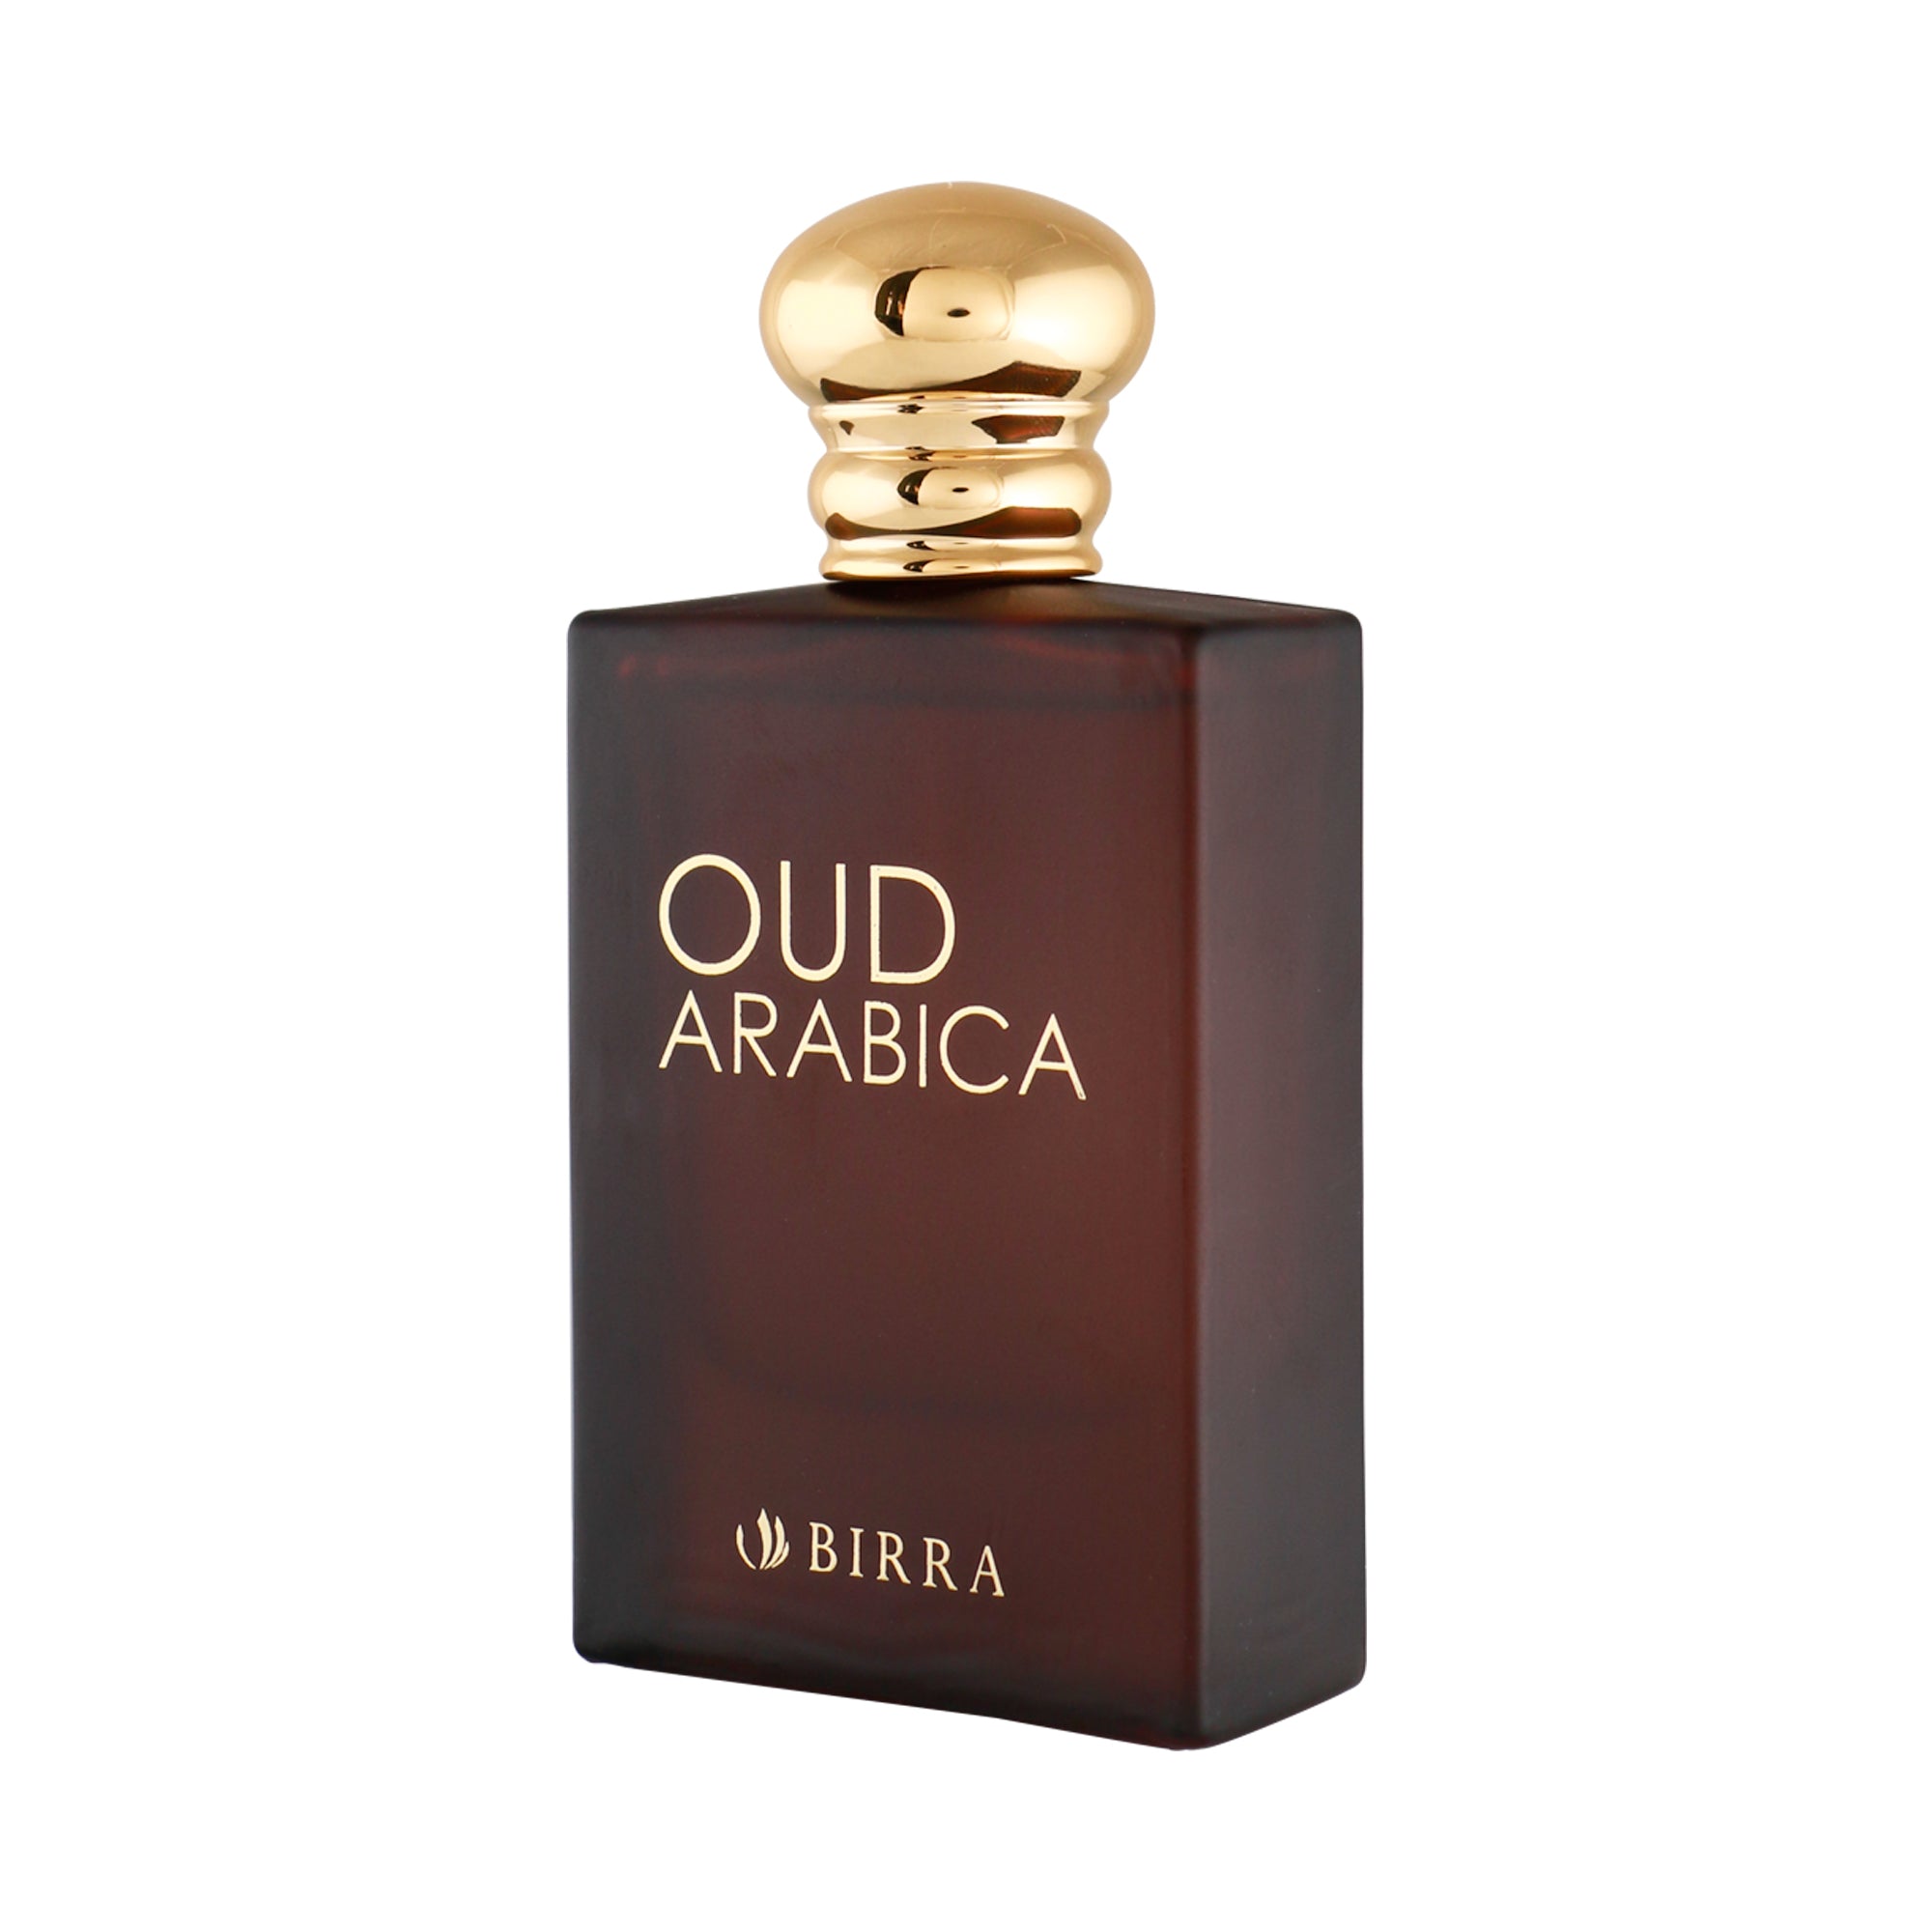 oudarabica-Premium Perfume for men